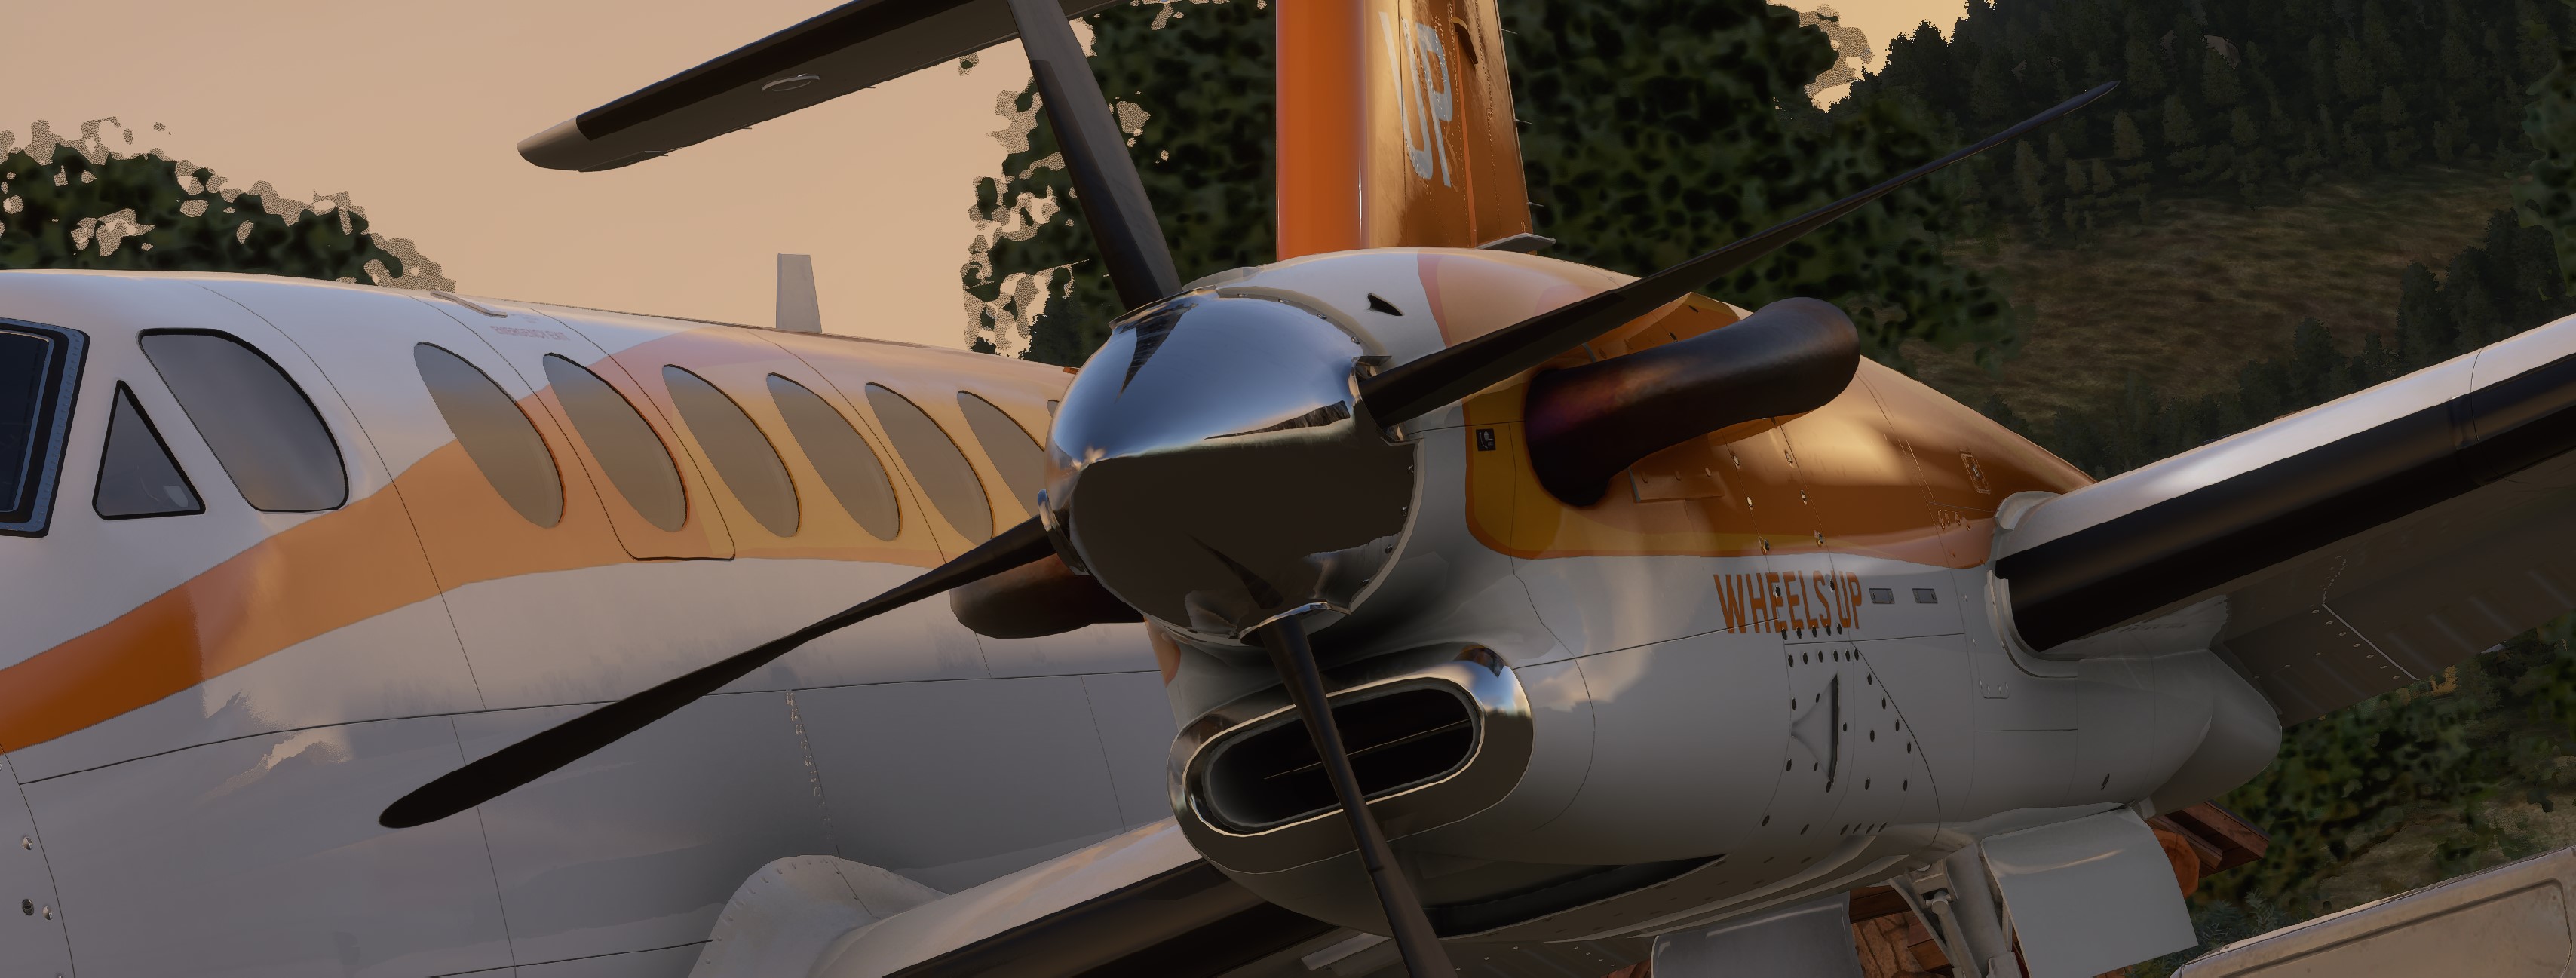 King Air Wheels Up Liveries Microsoft Flight Simulator Forums